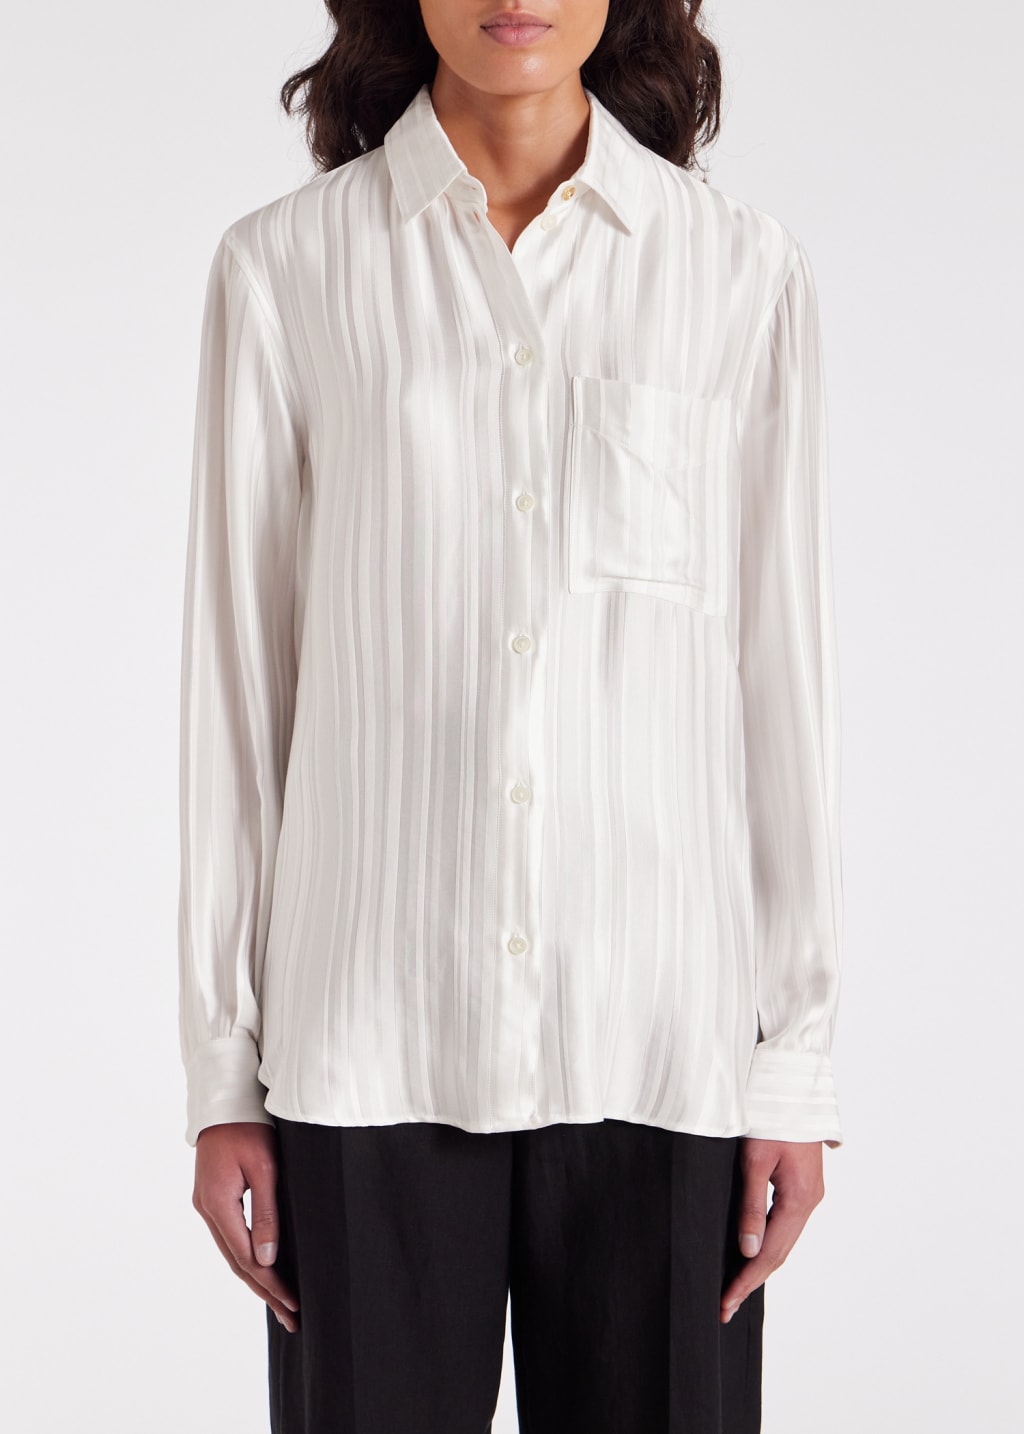 Model View - Women's White 'Shadow Stripe' Shirt Paul Smith